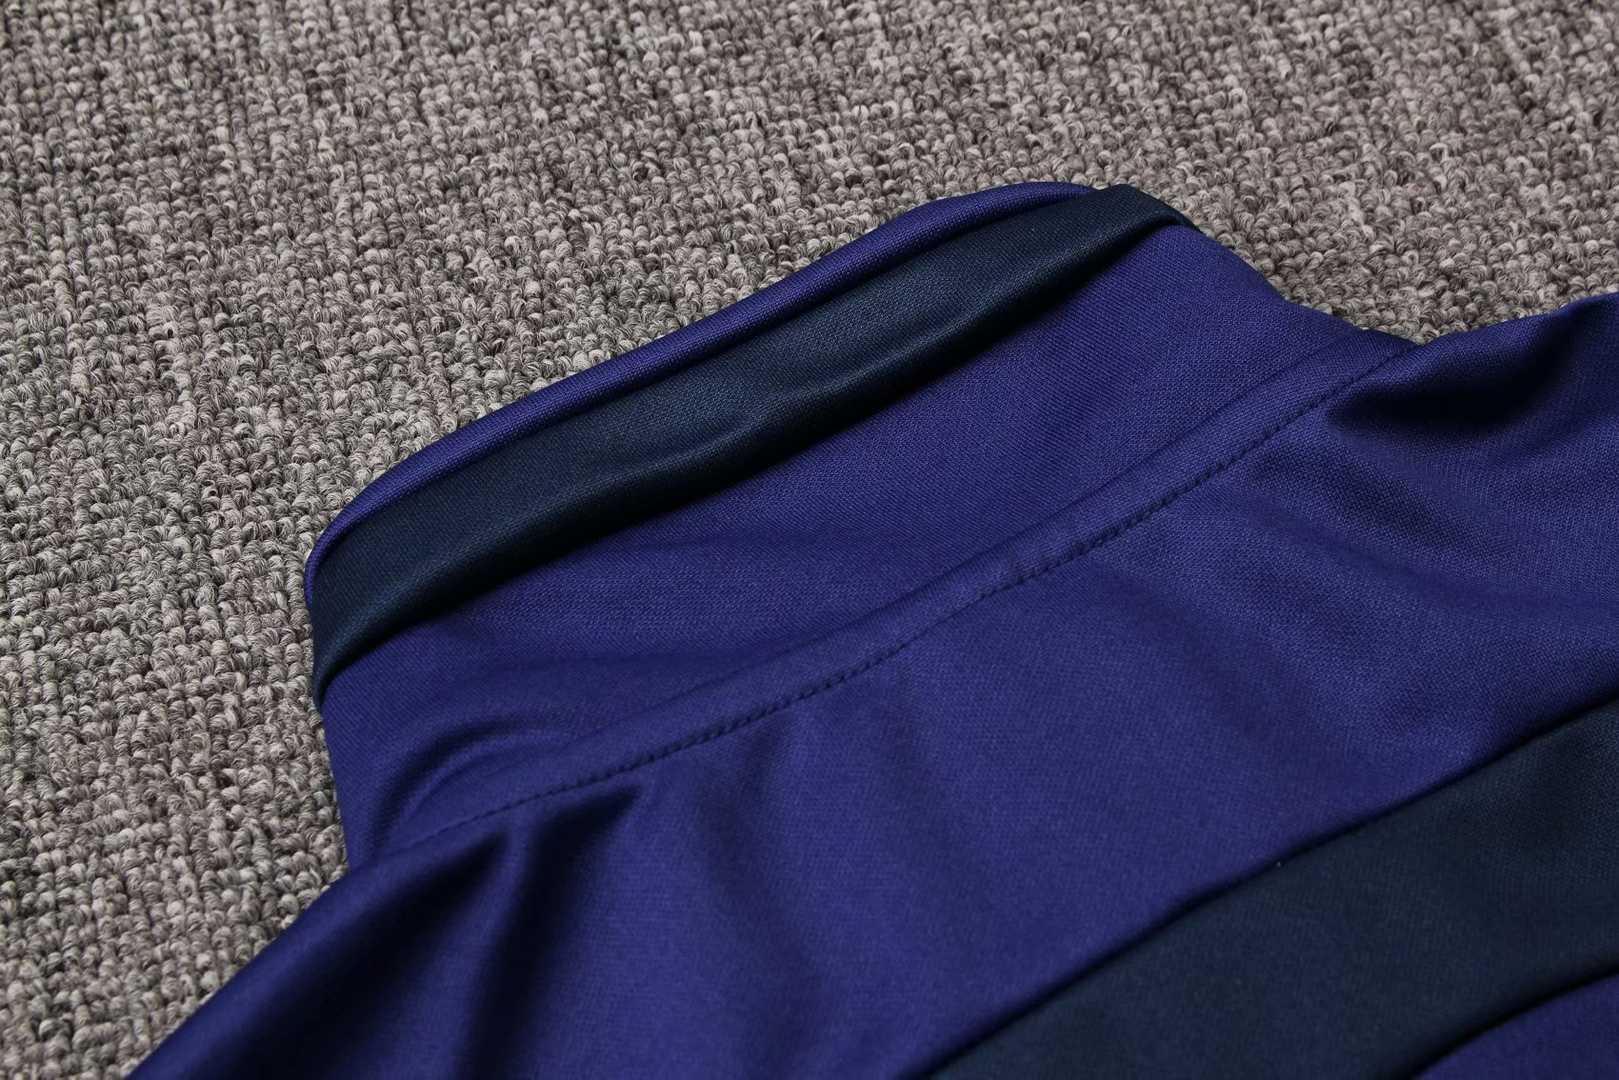 2019/20 Manchester United High Neck Blue Mens Soccer Training Suit(Jacket + Pants)